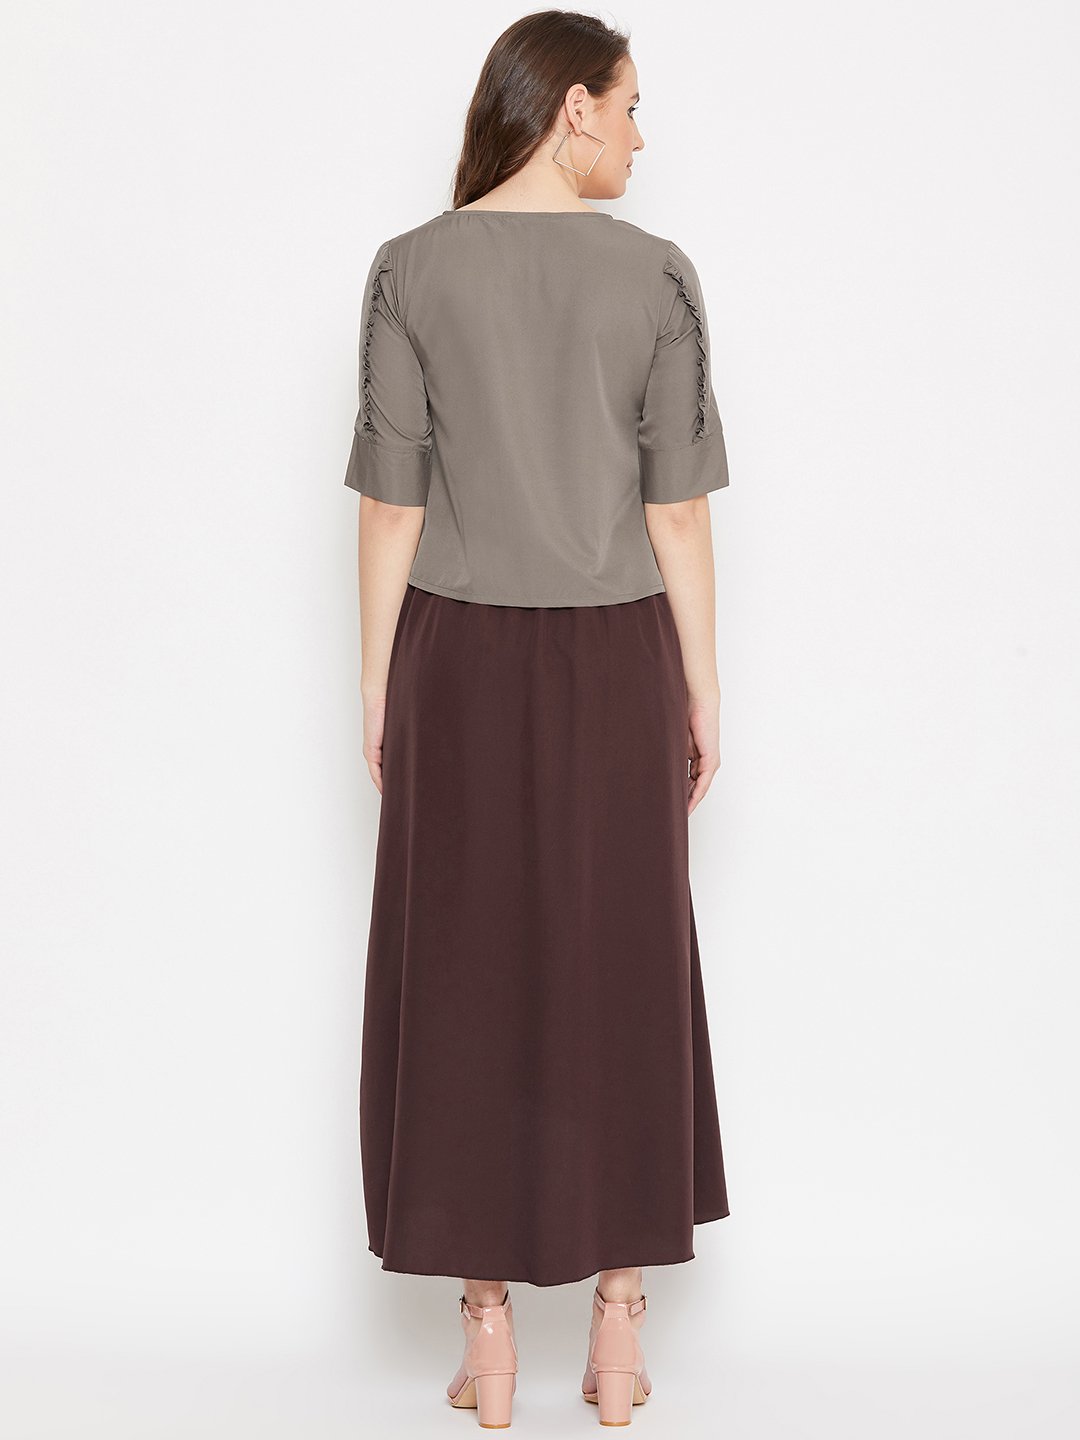 Women's Frill Sleeve Top & Asymmetrical Skirt  Set  - BitterLime